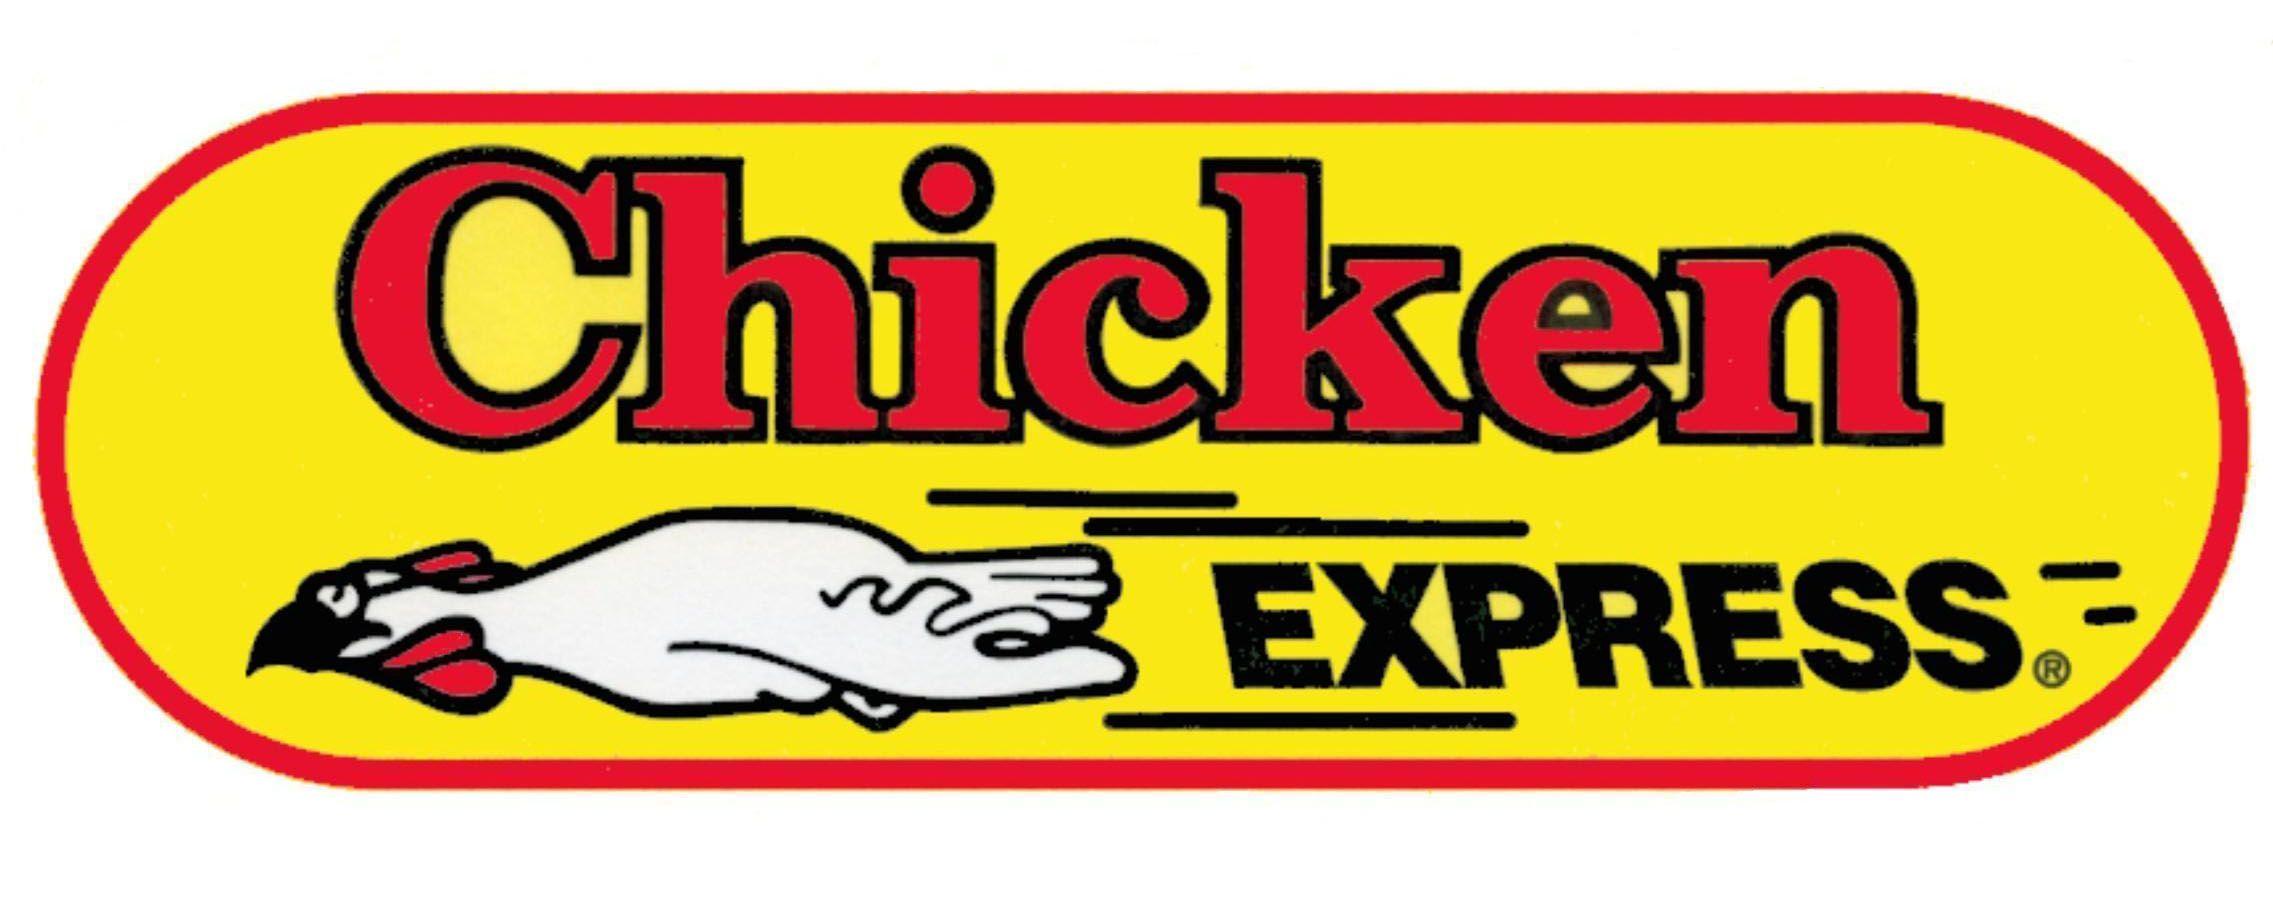 Chicken Express Logo - Chicken express Logos